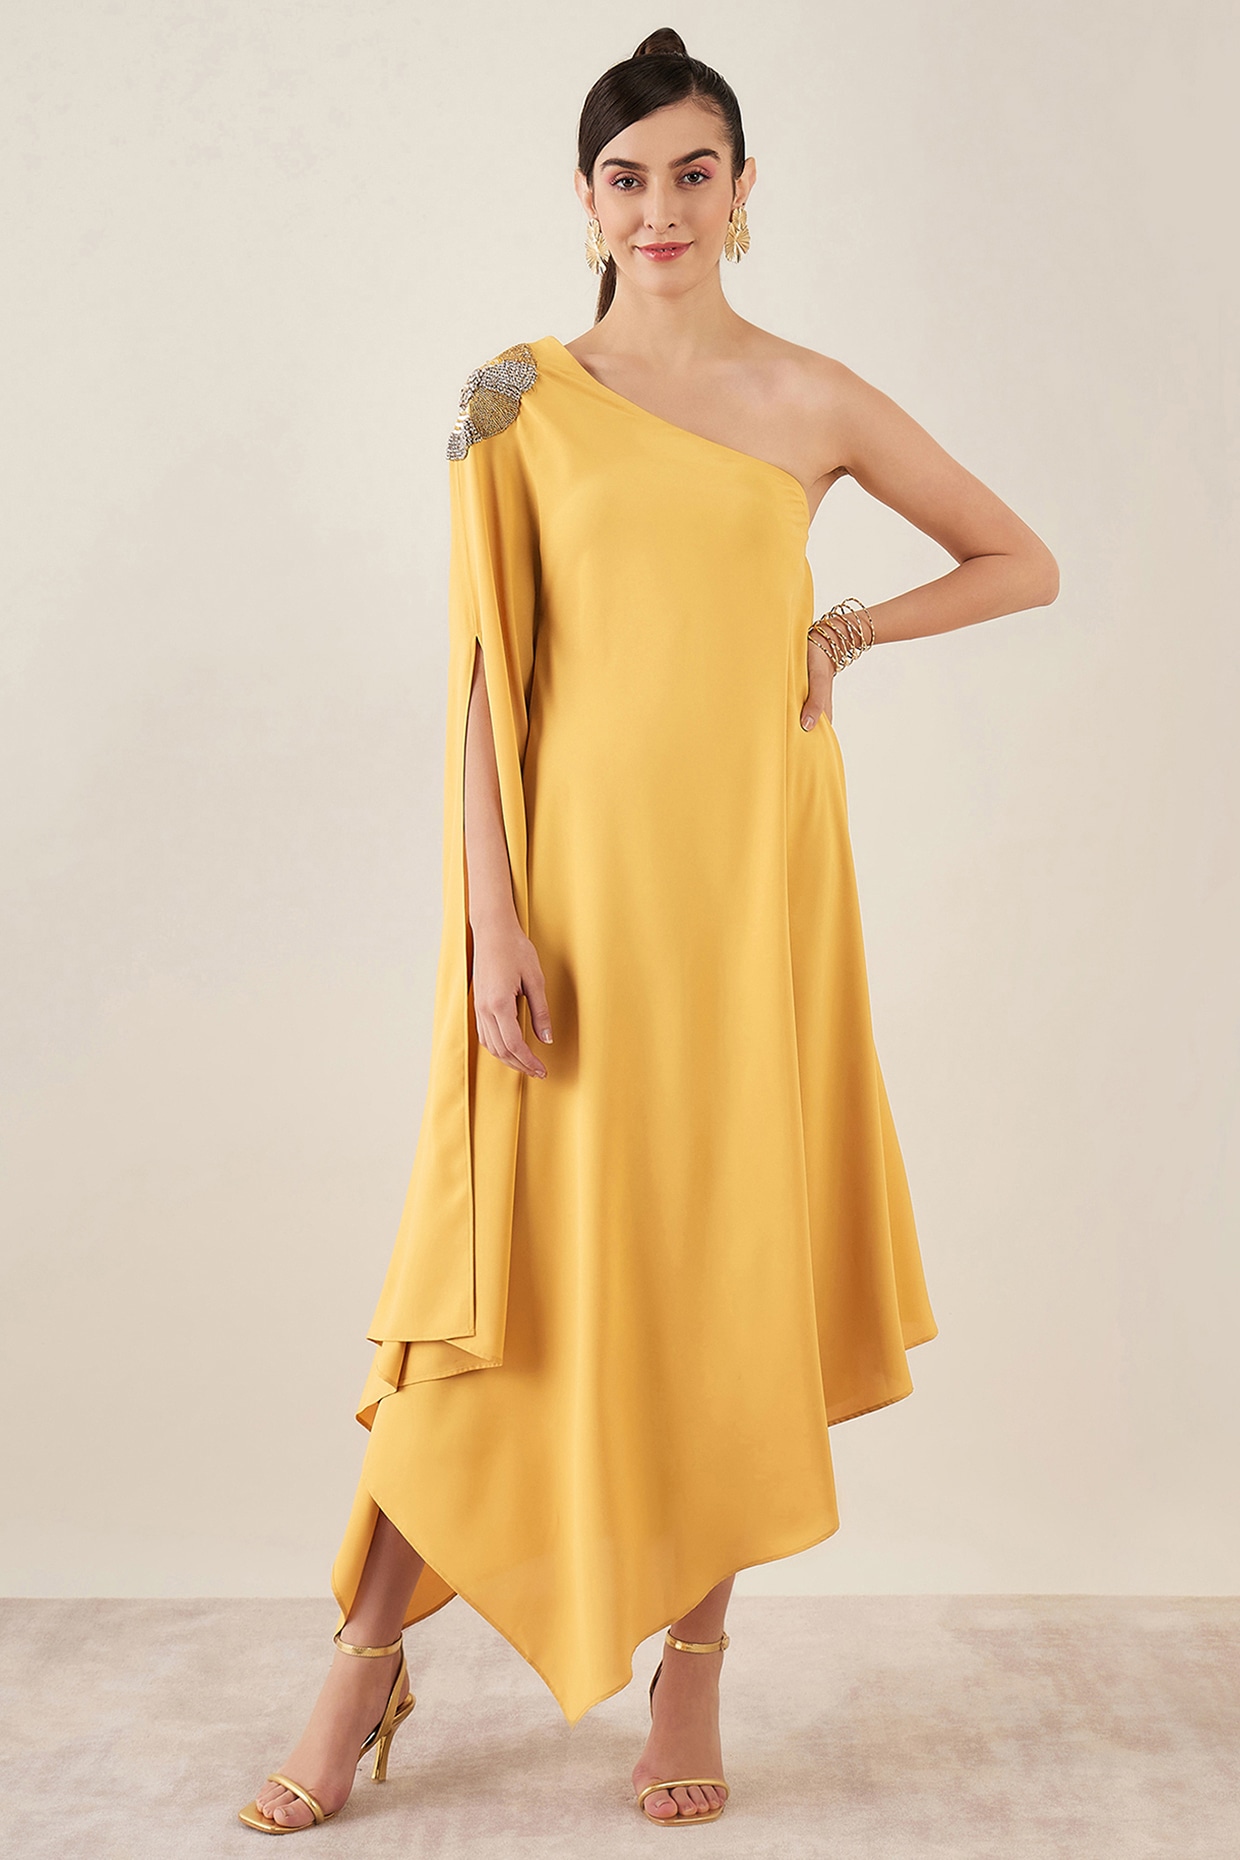 Women's Printed Yellow Poly Crepe Dress